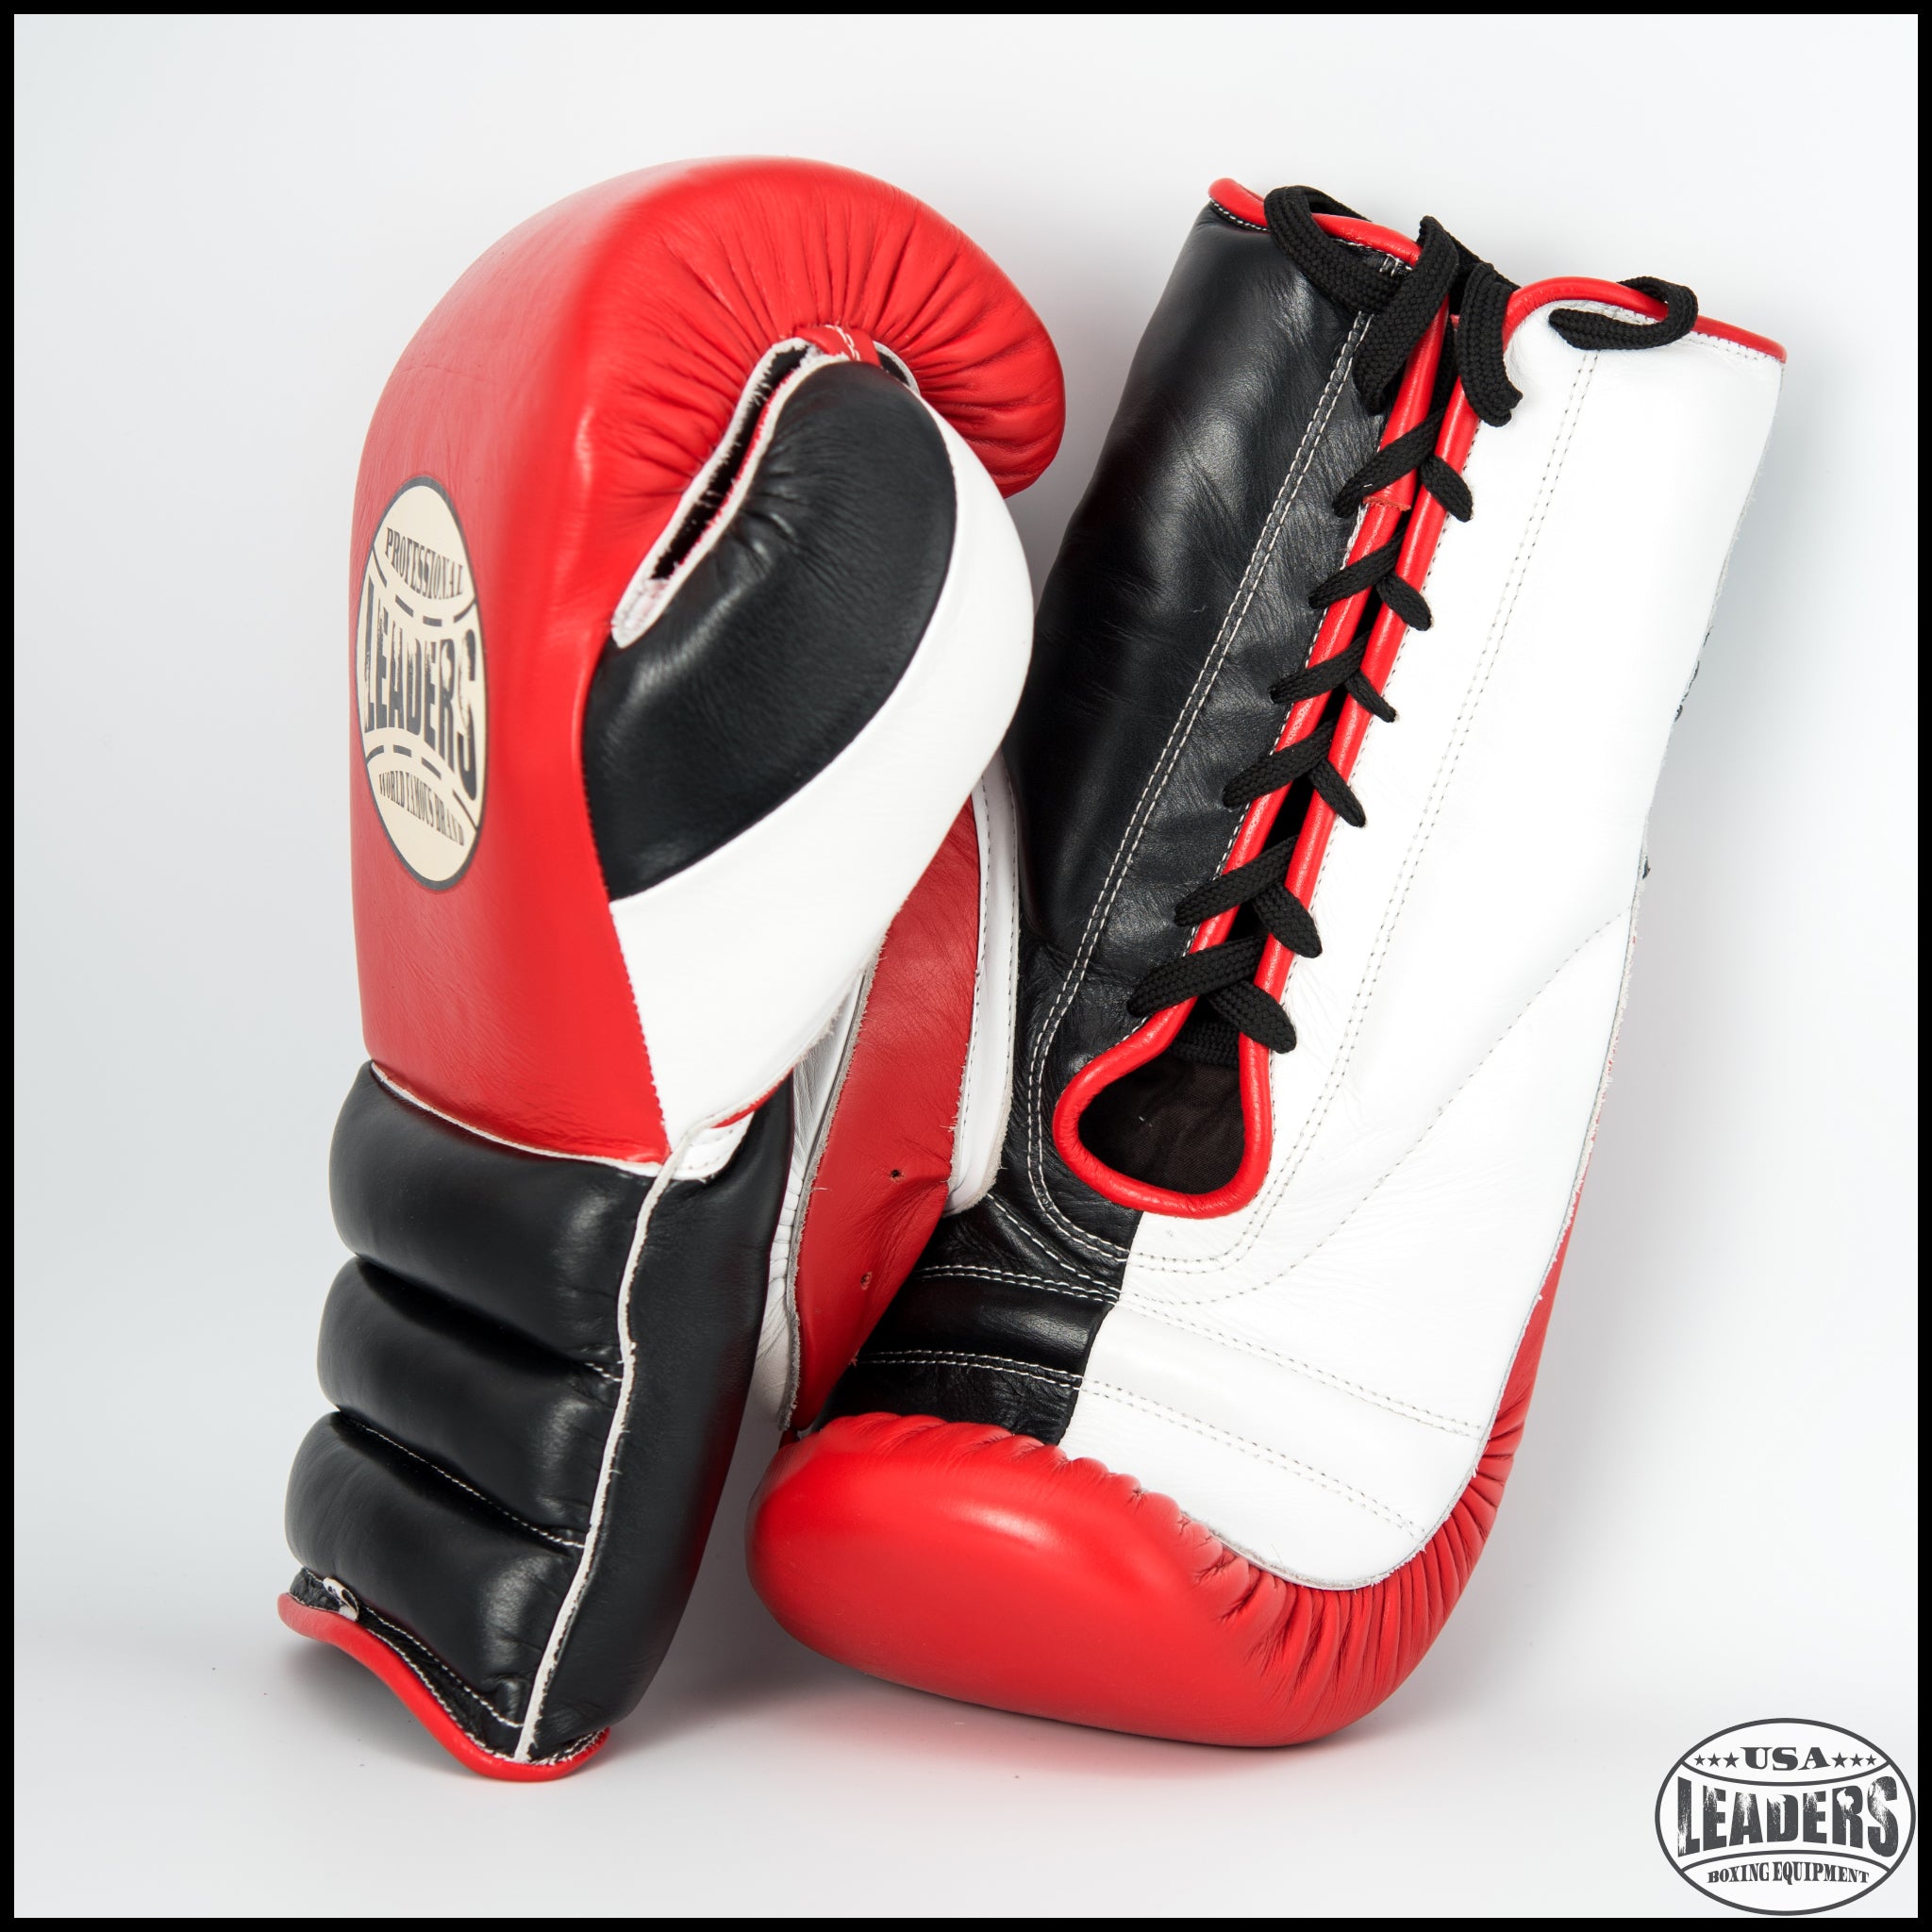 Elite Pro Style Boxing Gloves (Red-Black-White)